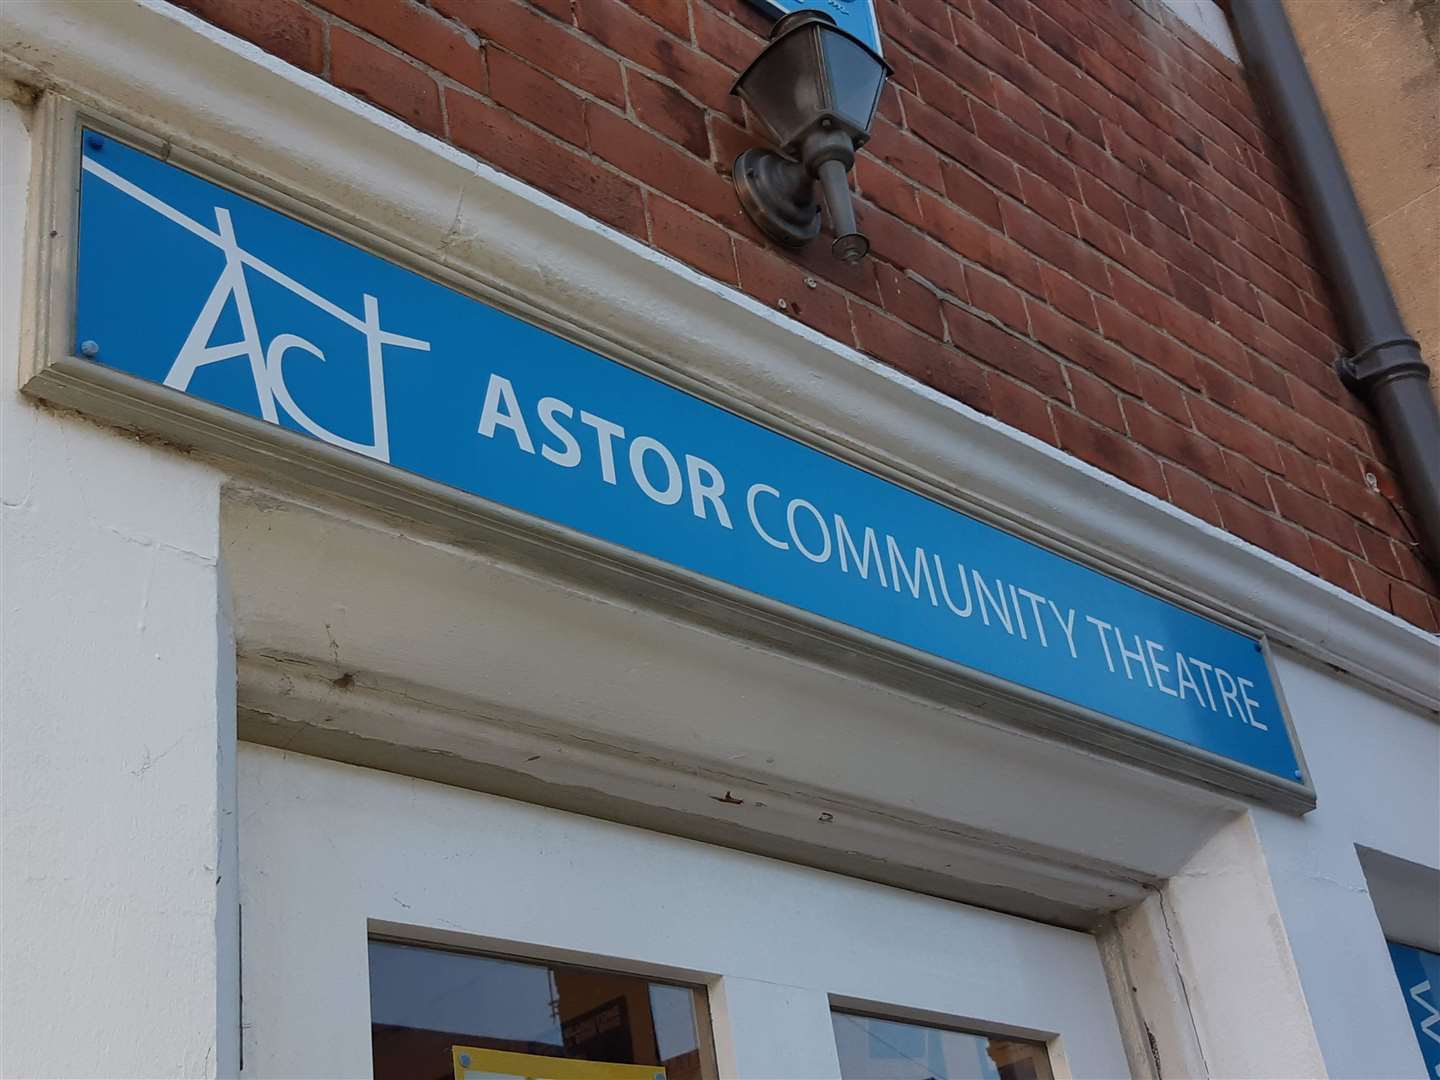 Astor Community Theatre